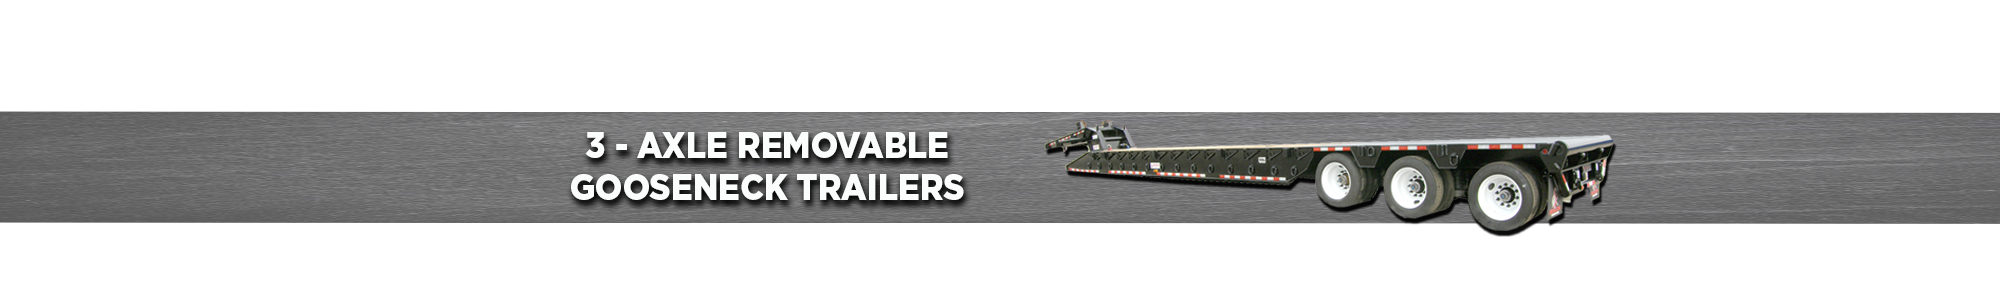 3-Axle Removable Gooseneck Trailers